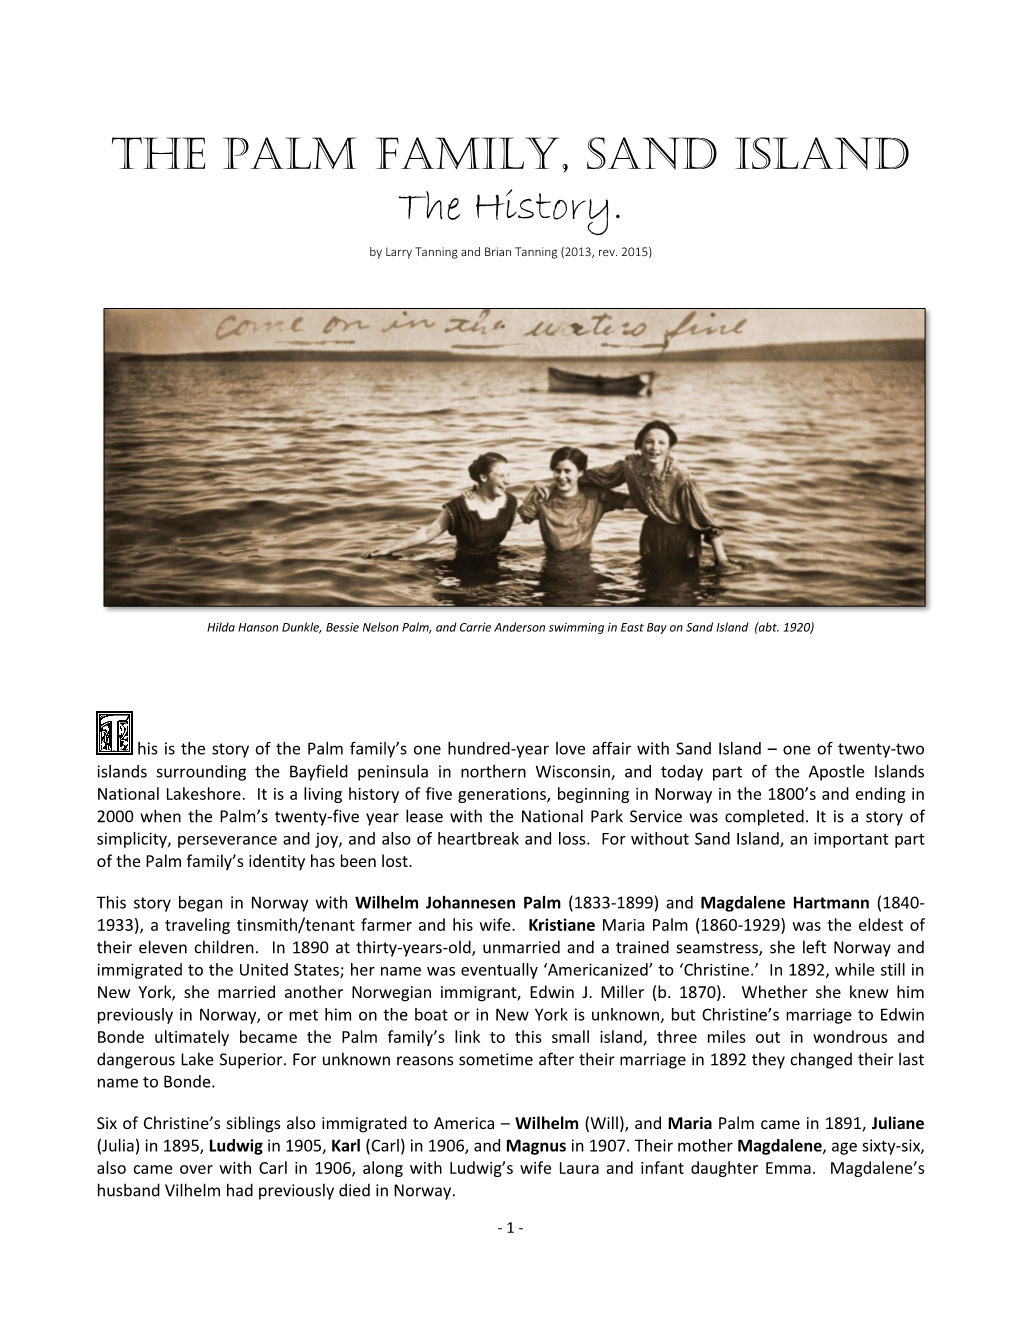 The Palm Family Sand Island History